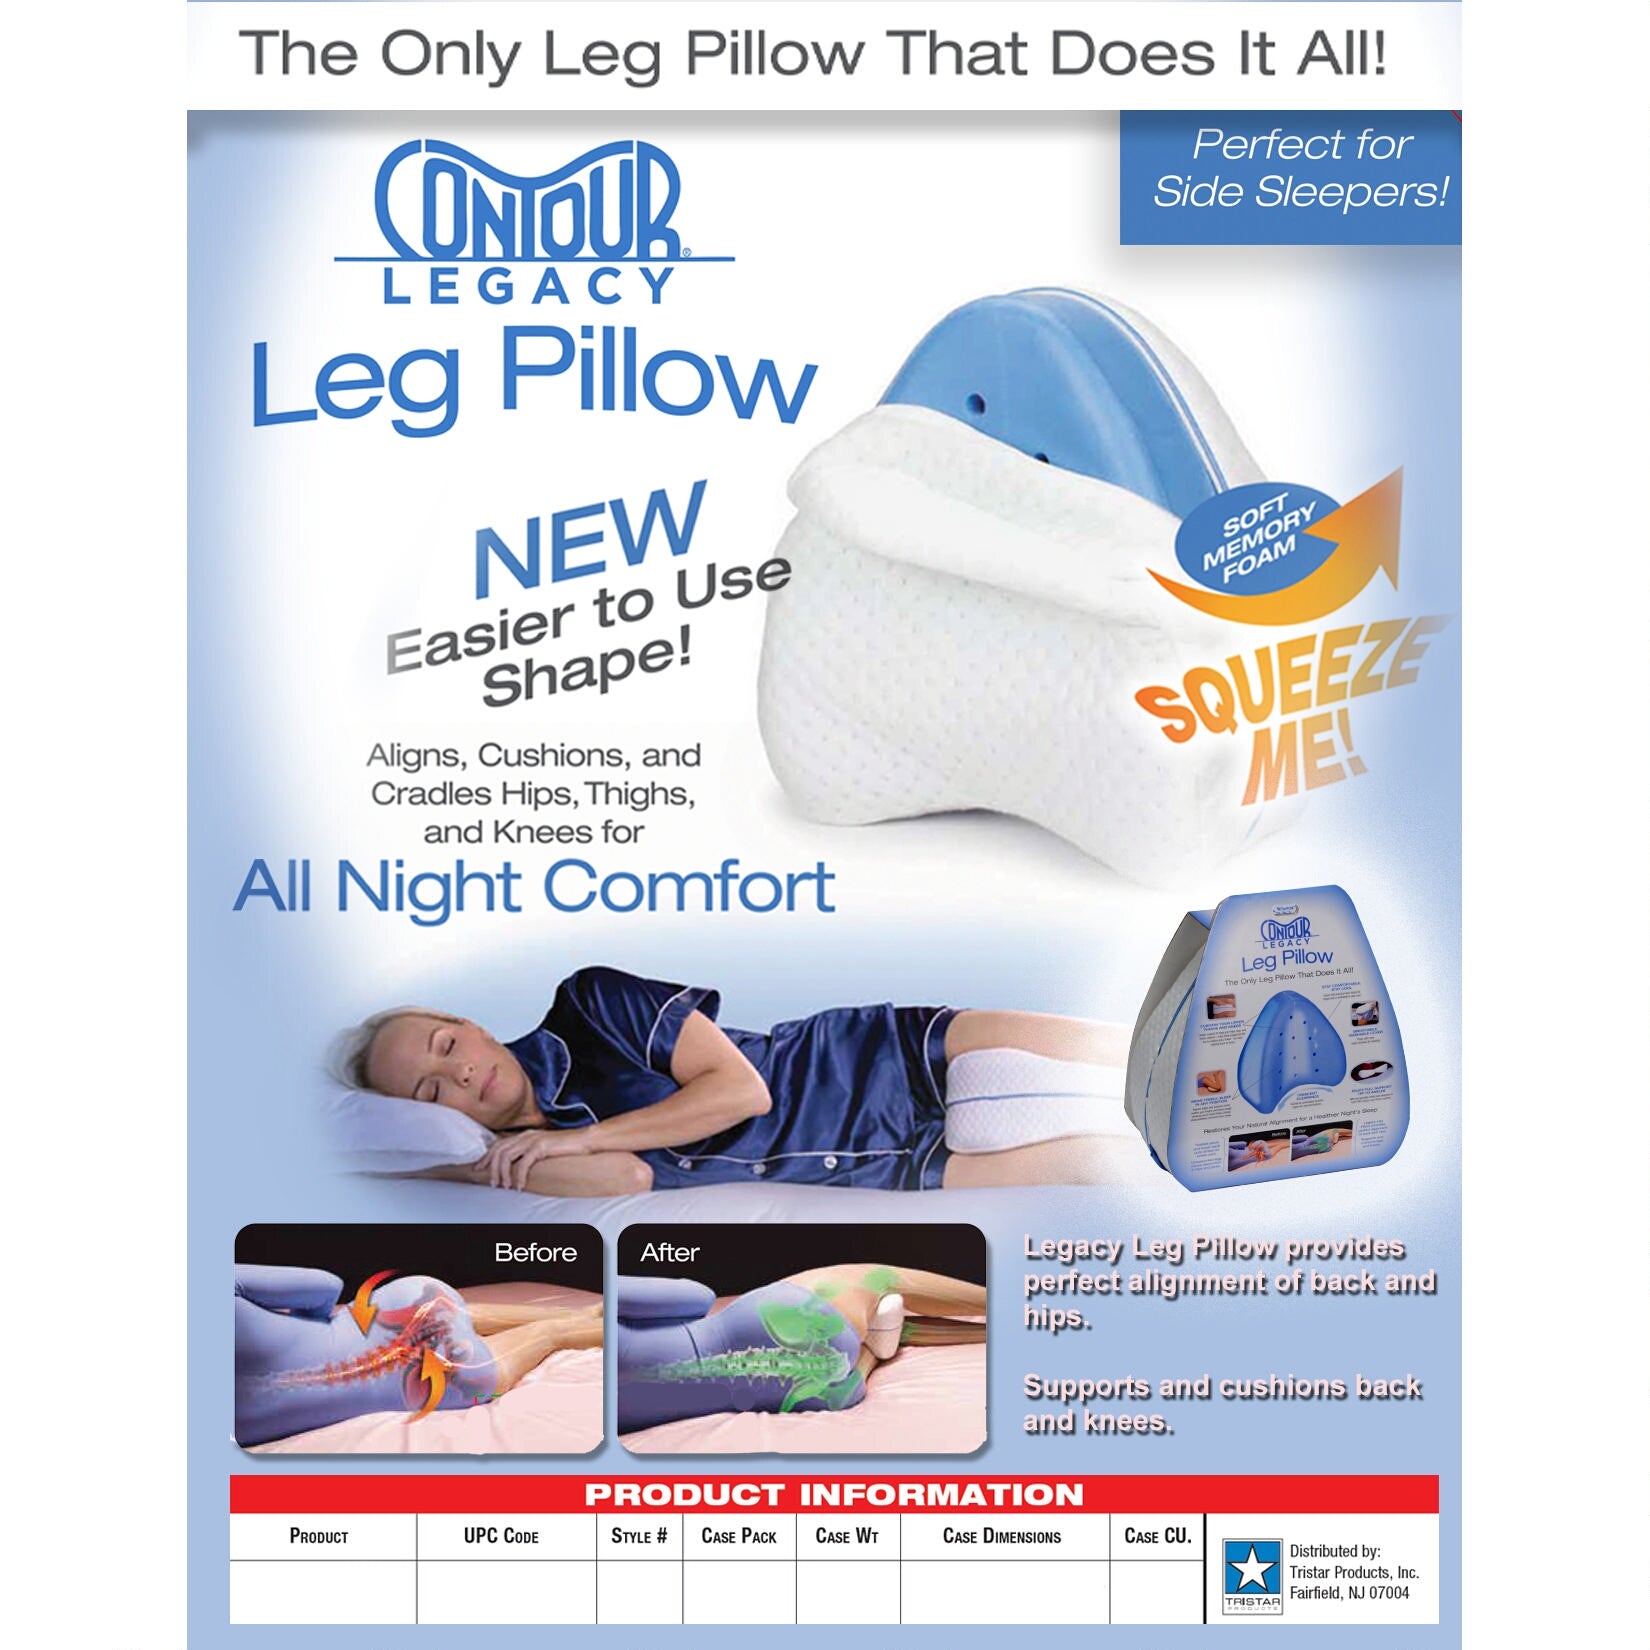 New As Seen On TV Contour Legacy Leg Pillow Orthopedic Leg Pillow For Al,  Each 